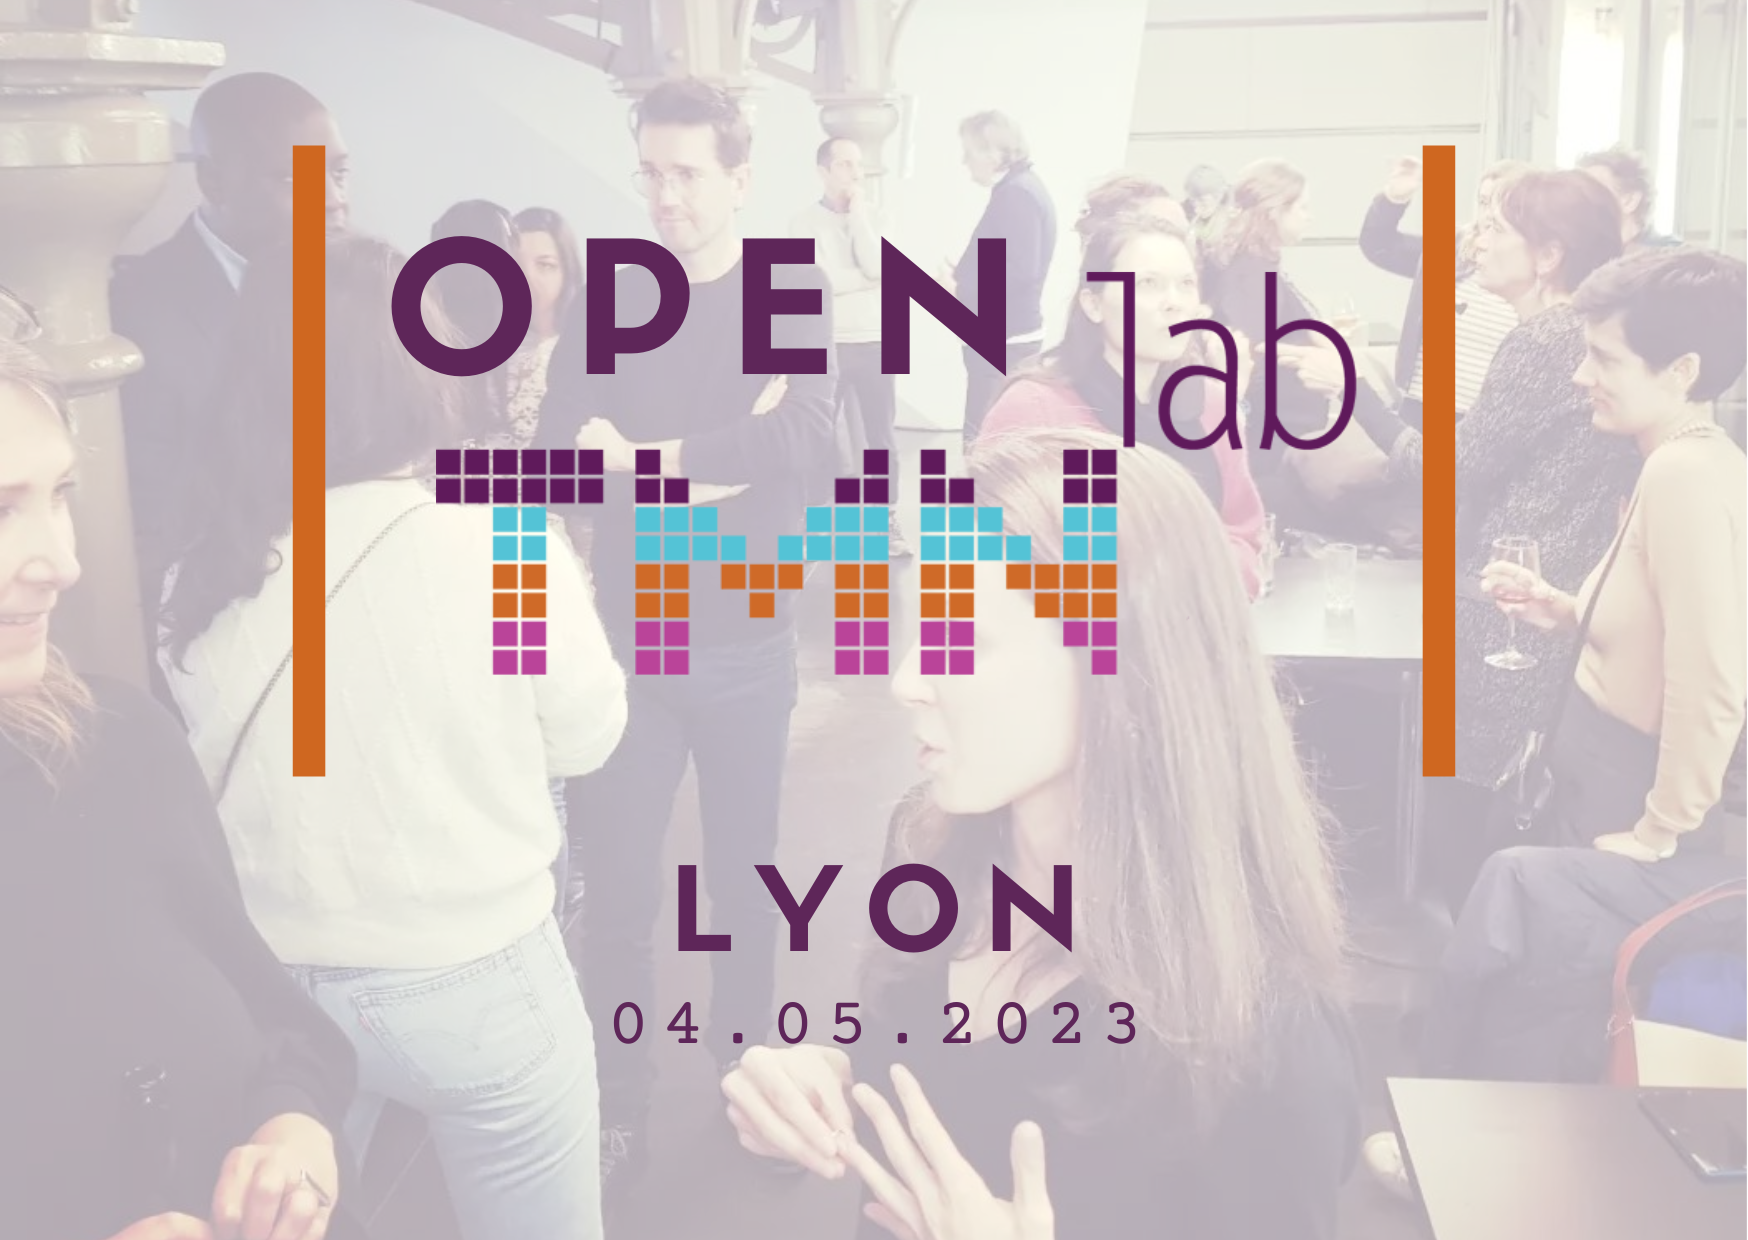 Open TMNlab Lyon